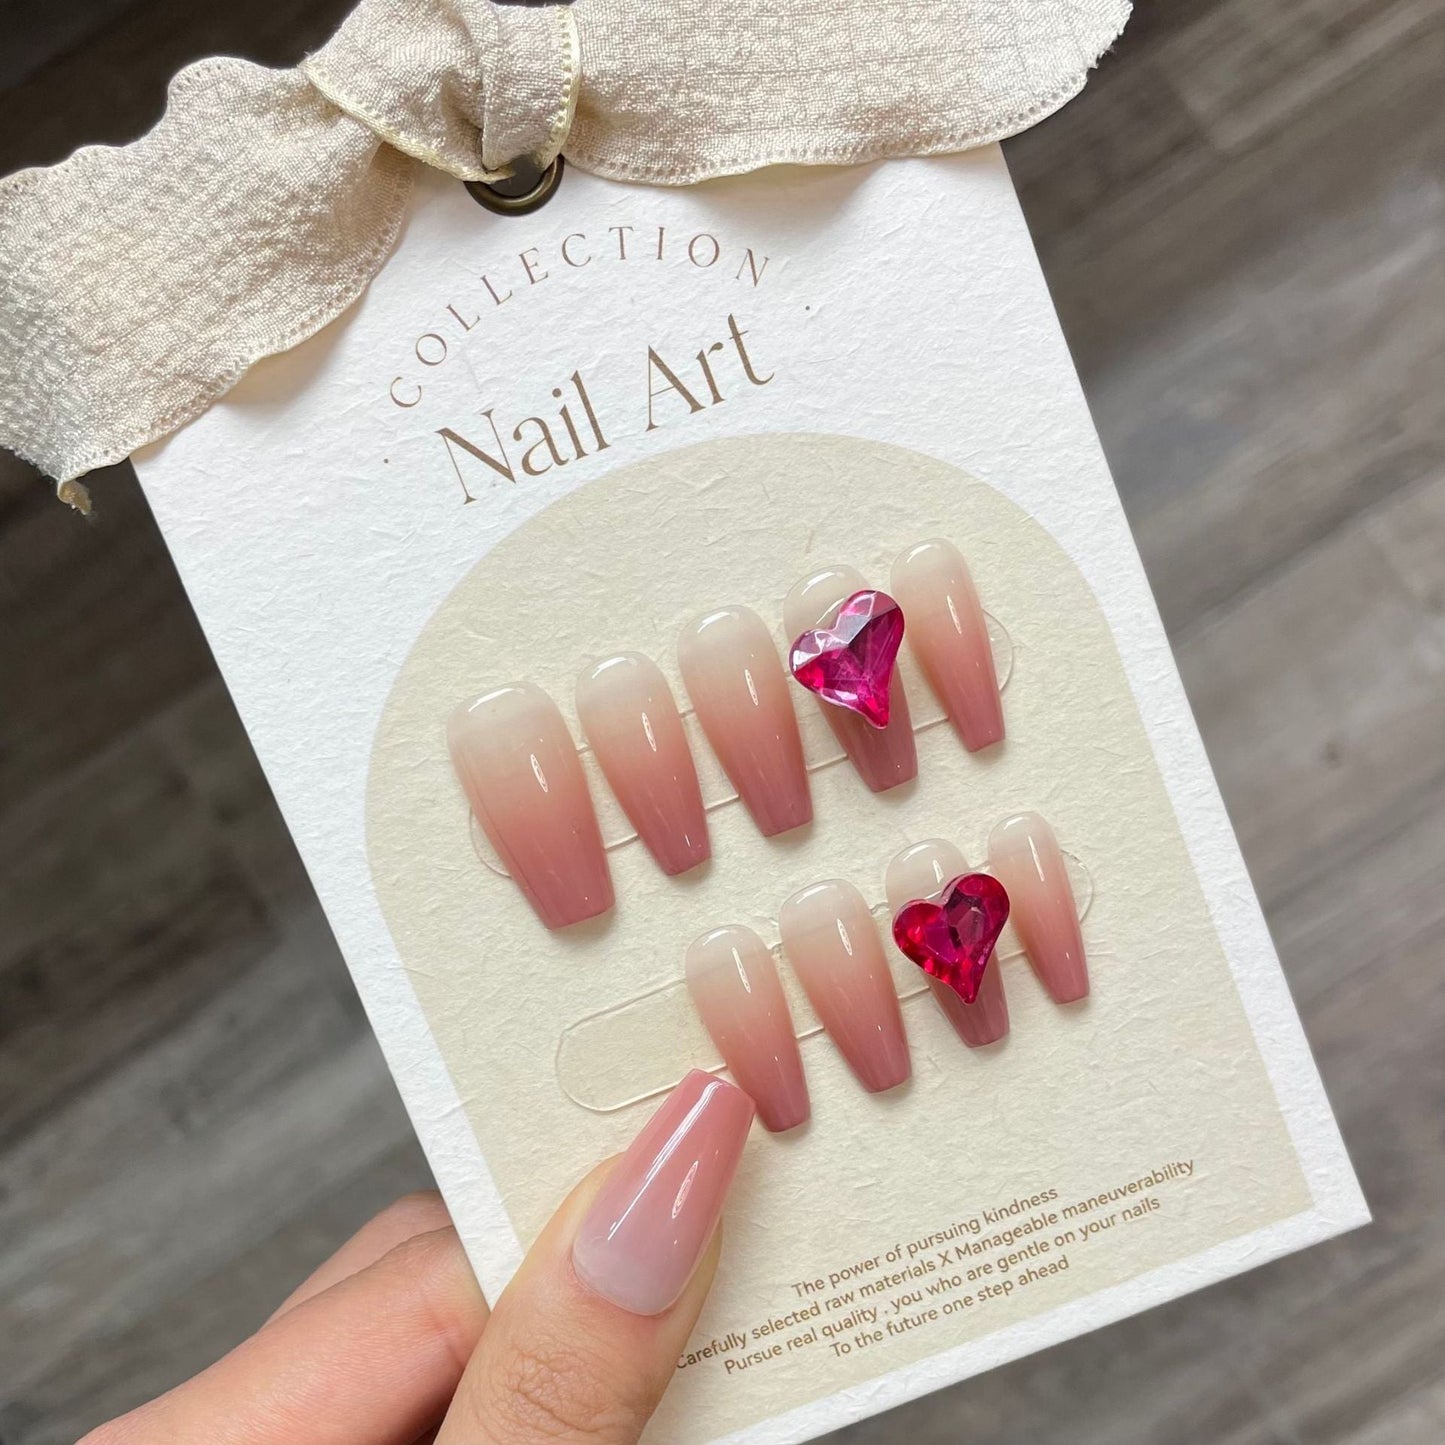 808 Rhinestone style press on nails 100% handmade false nails nude color pink